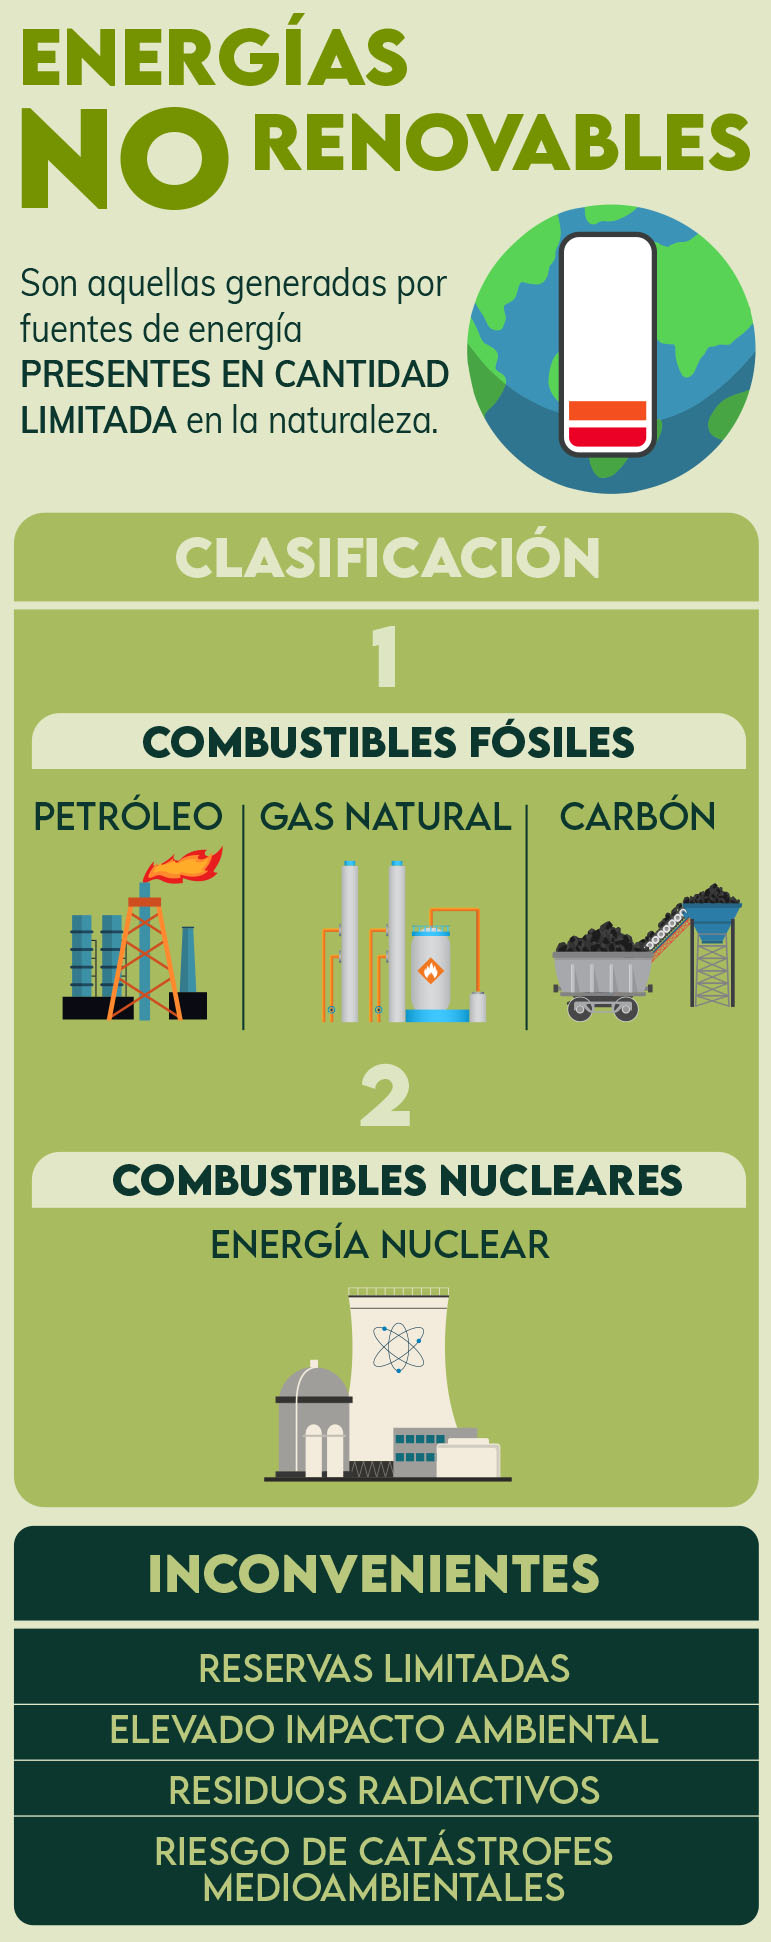 Energías no renovables- infografia